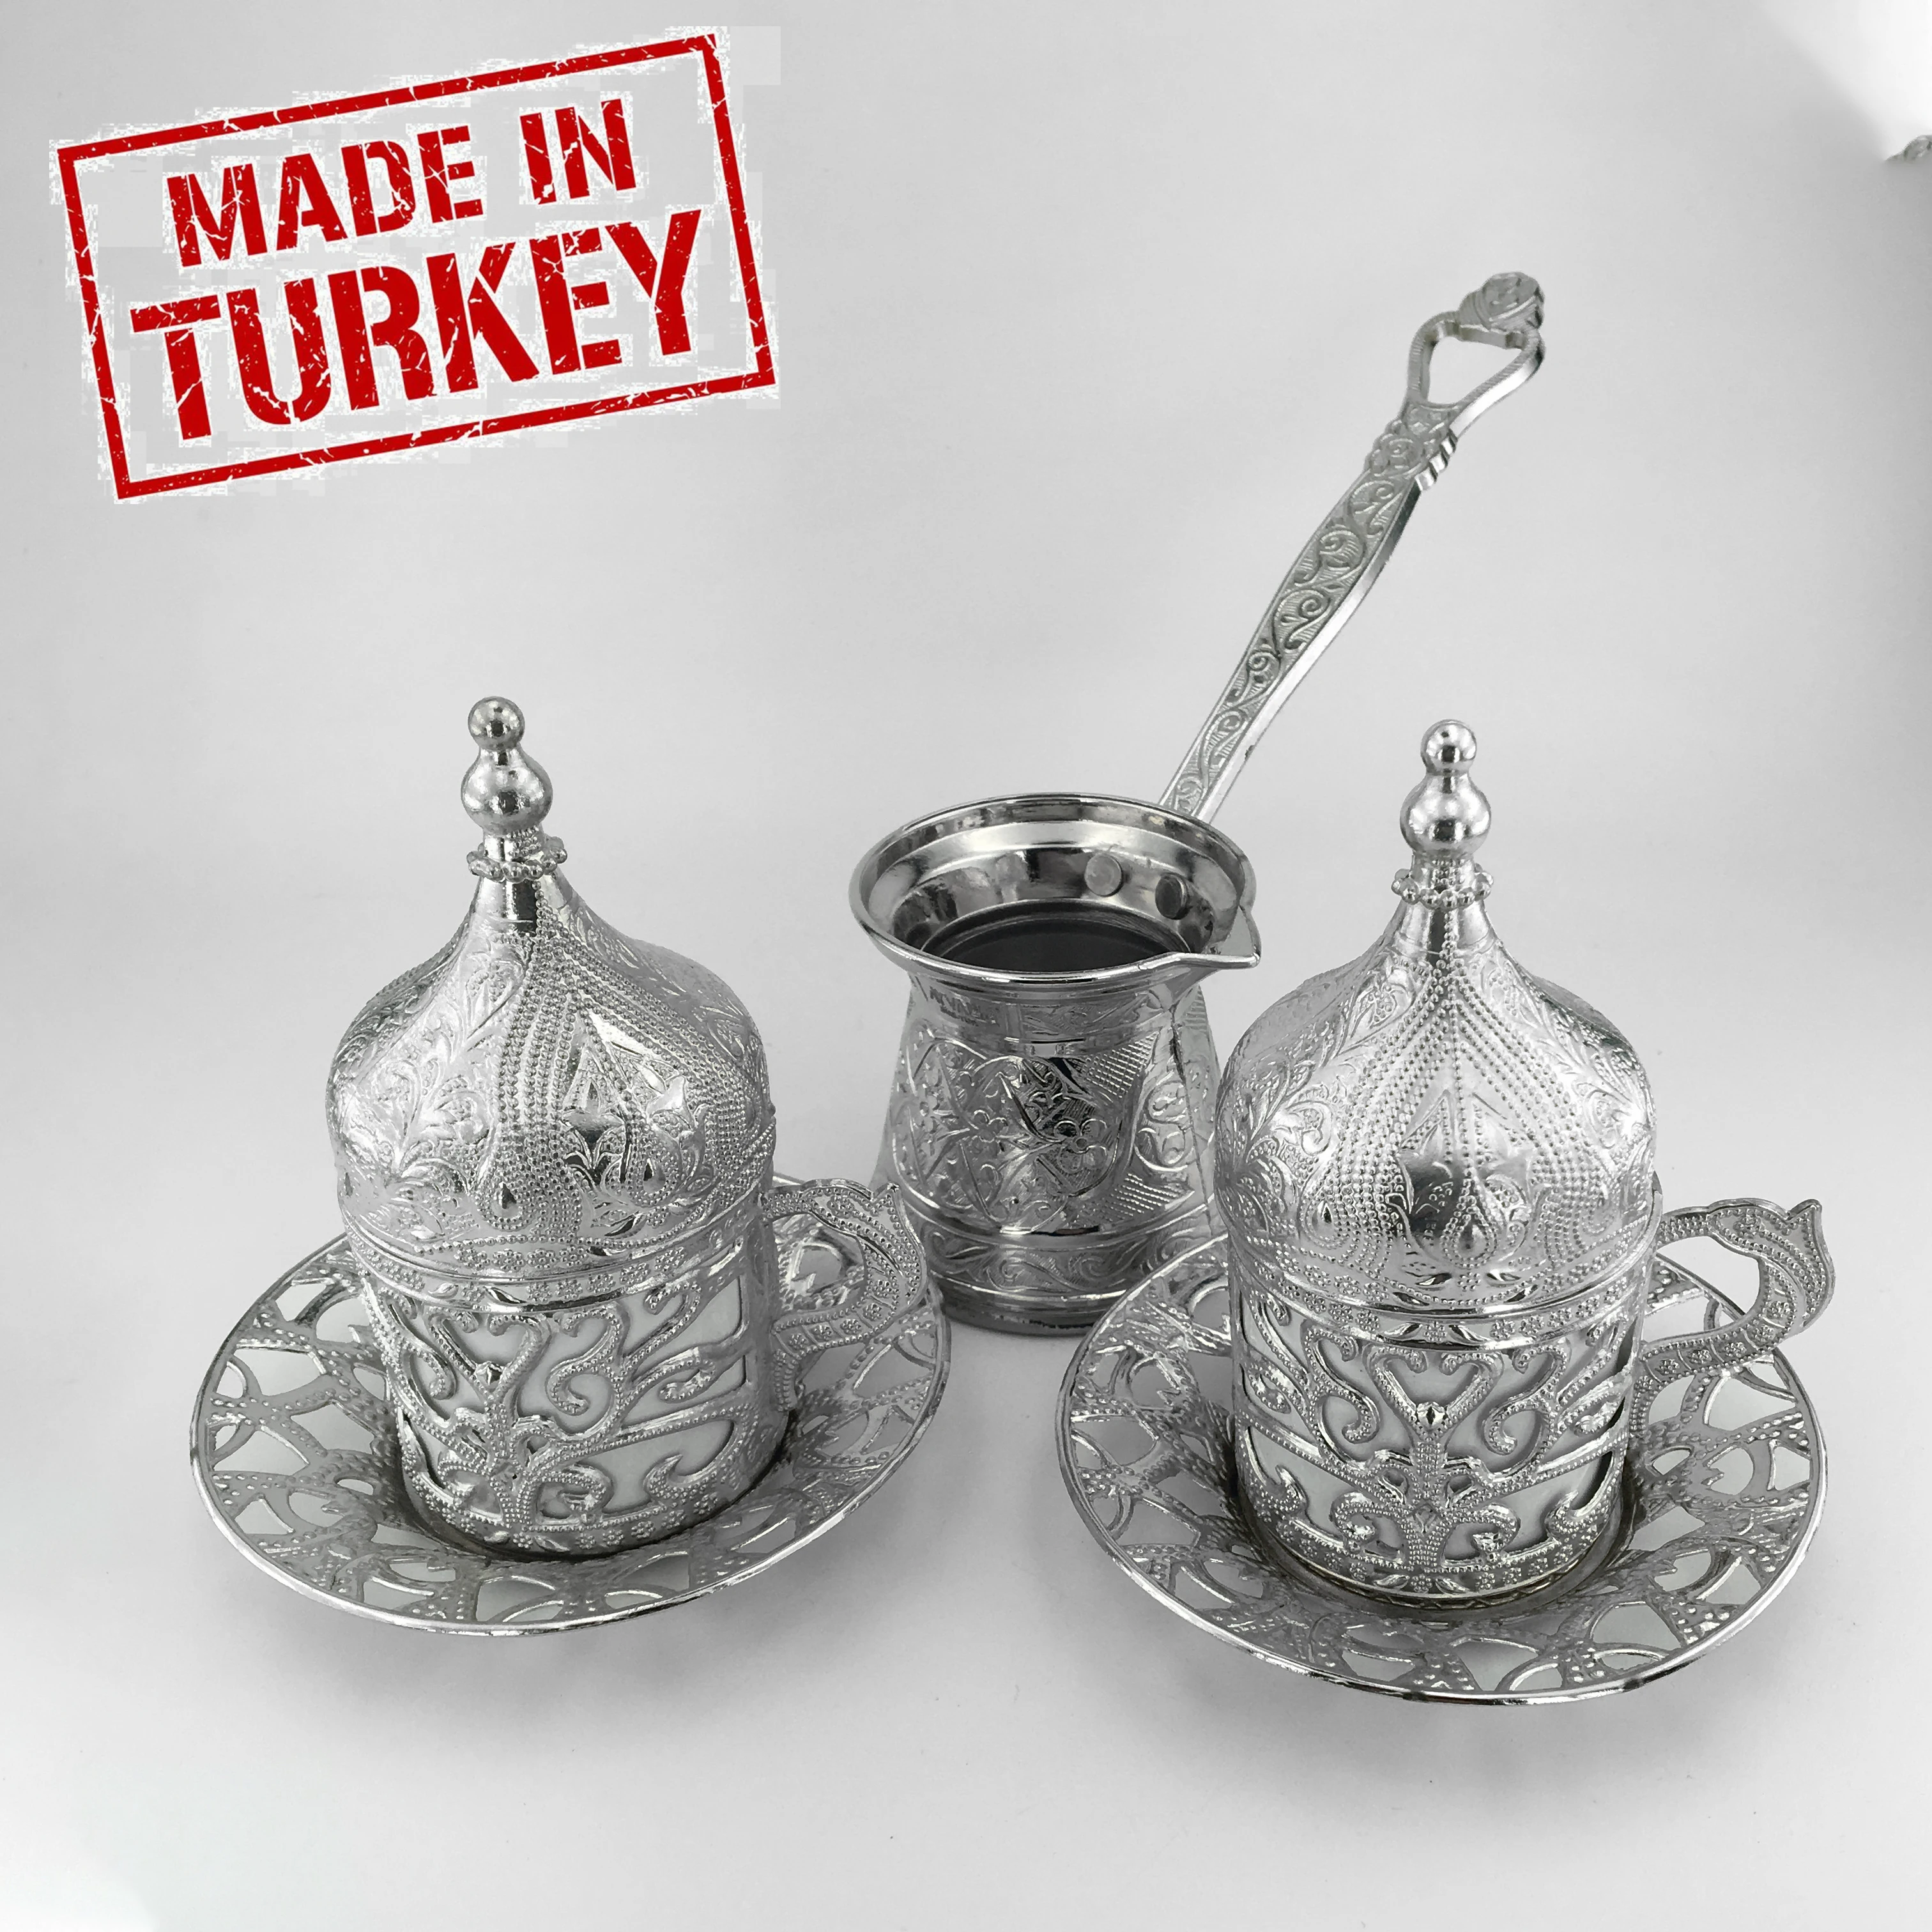 Coffes Copper Mug Cezve Pot Espresso Set With Maker Anatolian Ottoman Greek Made in Turkey  Winter Kitchen Grinder Tea